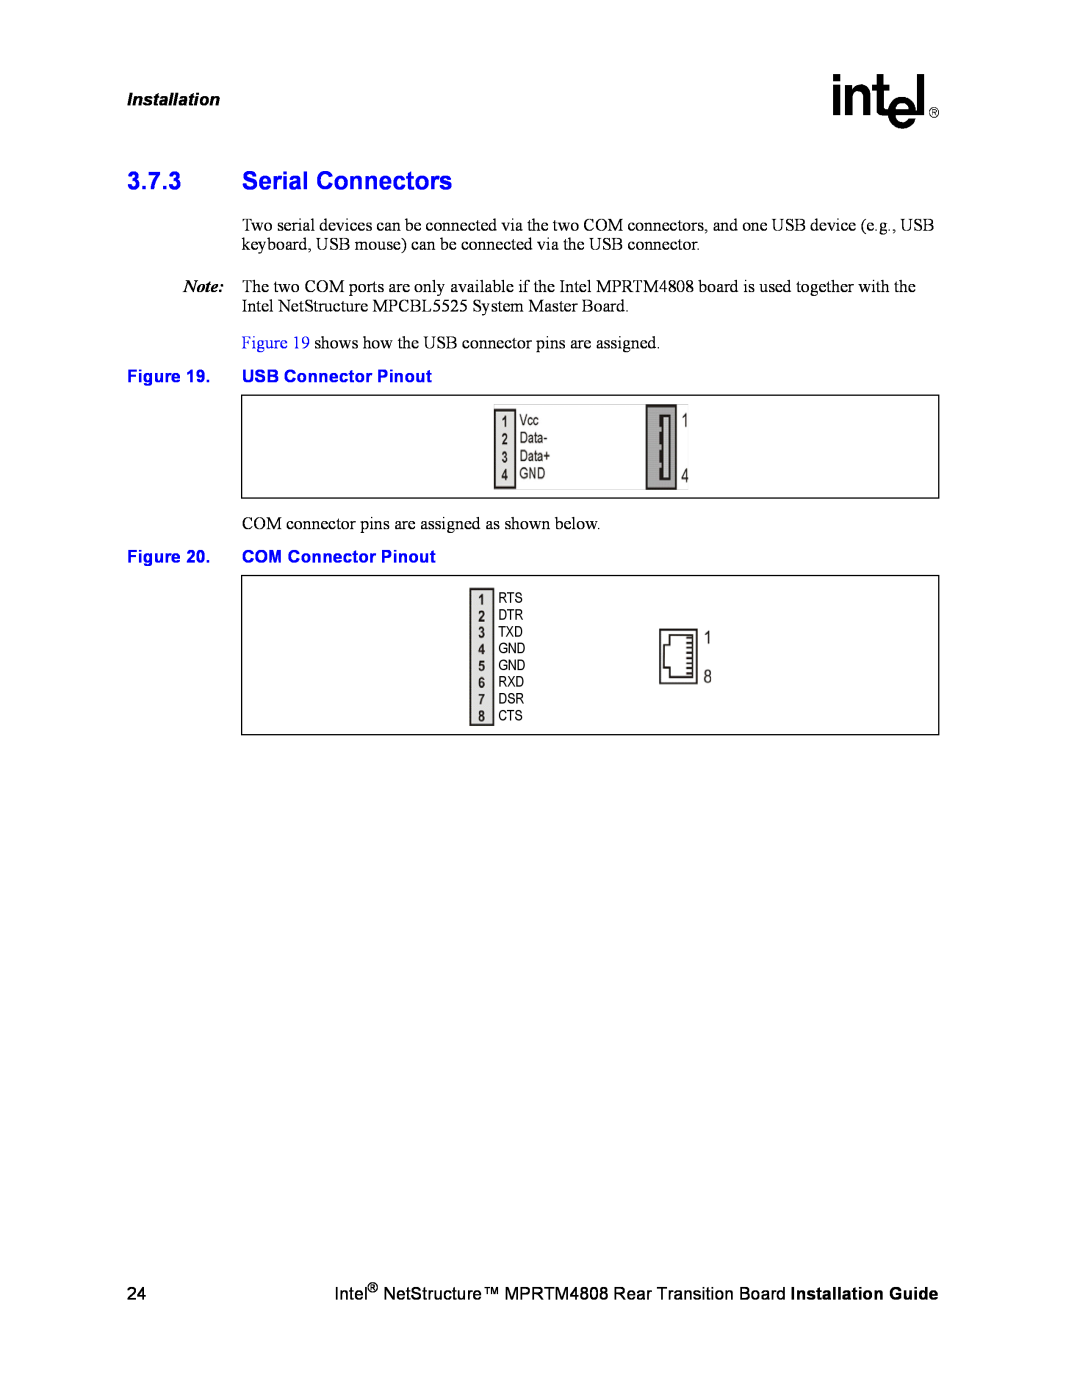 Intel MPRTM4808 manual 3.7.3Serial Connectors, USB Connector Pinout, COM Connector Pinout, Installation 